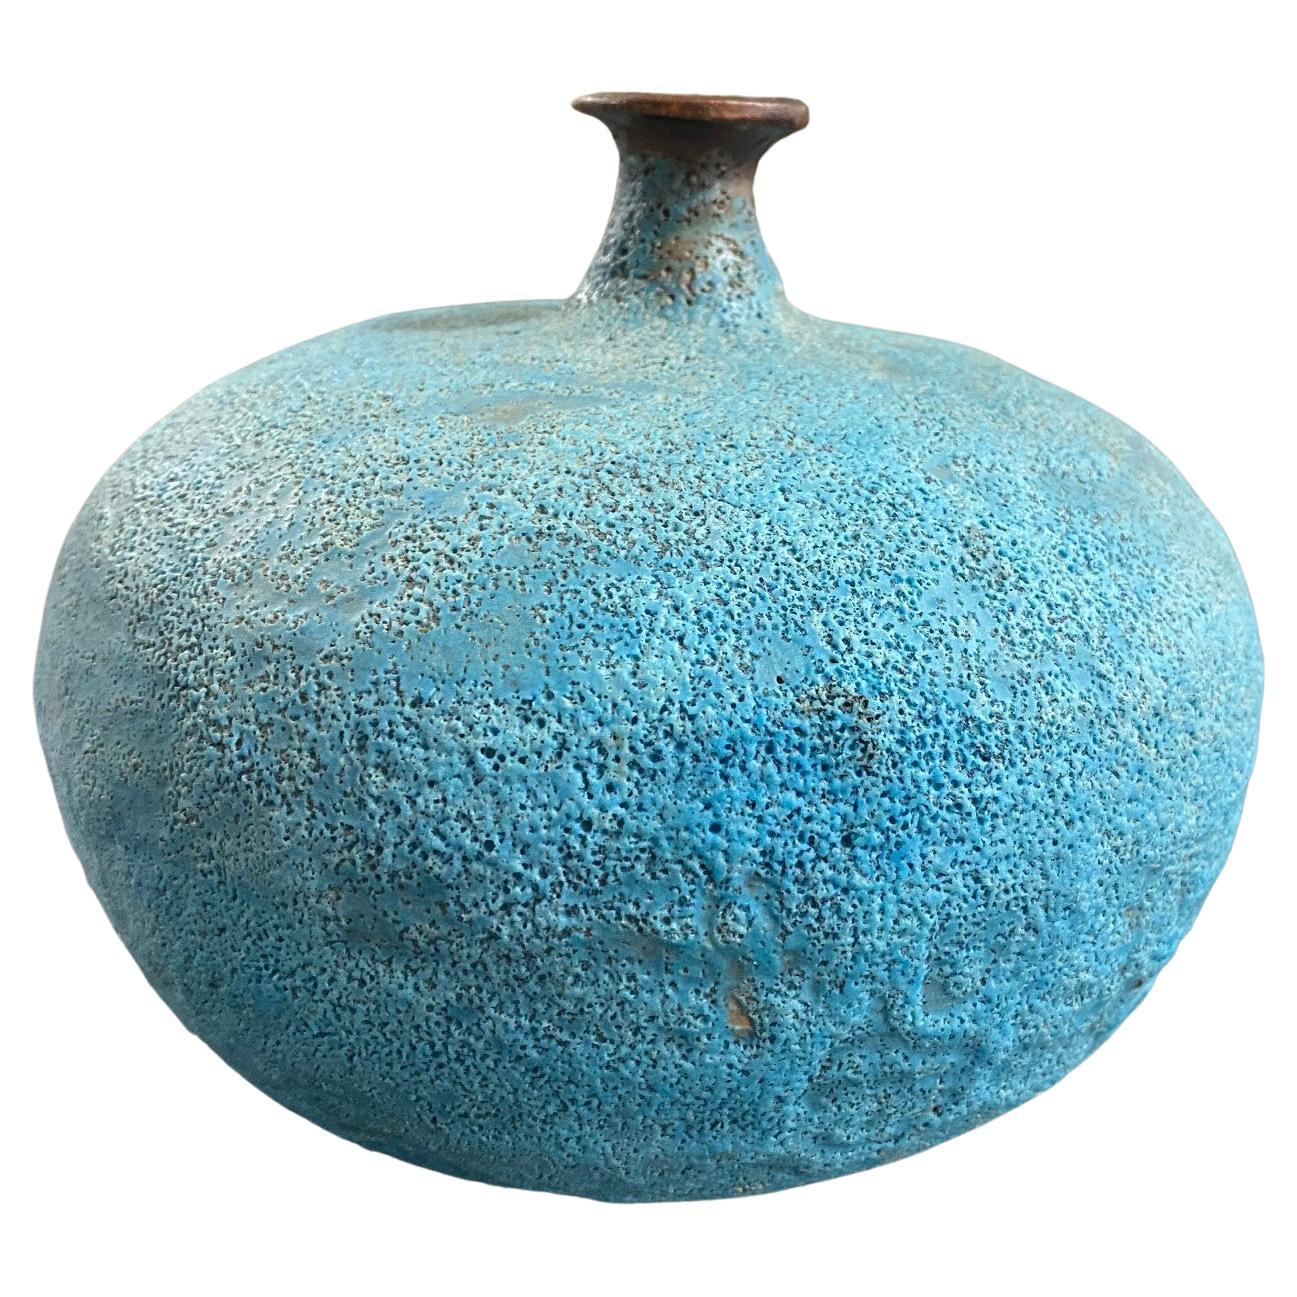 Studio Modern Art Multi Colored Oval Vase